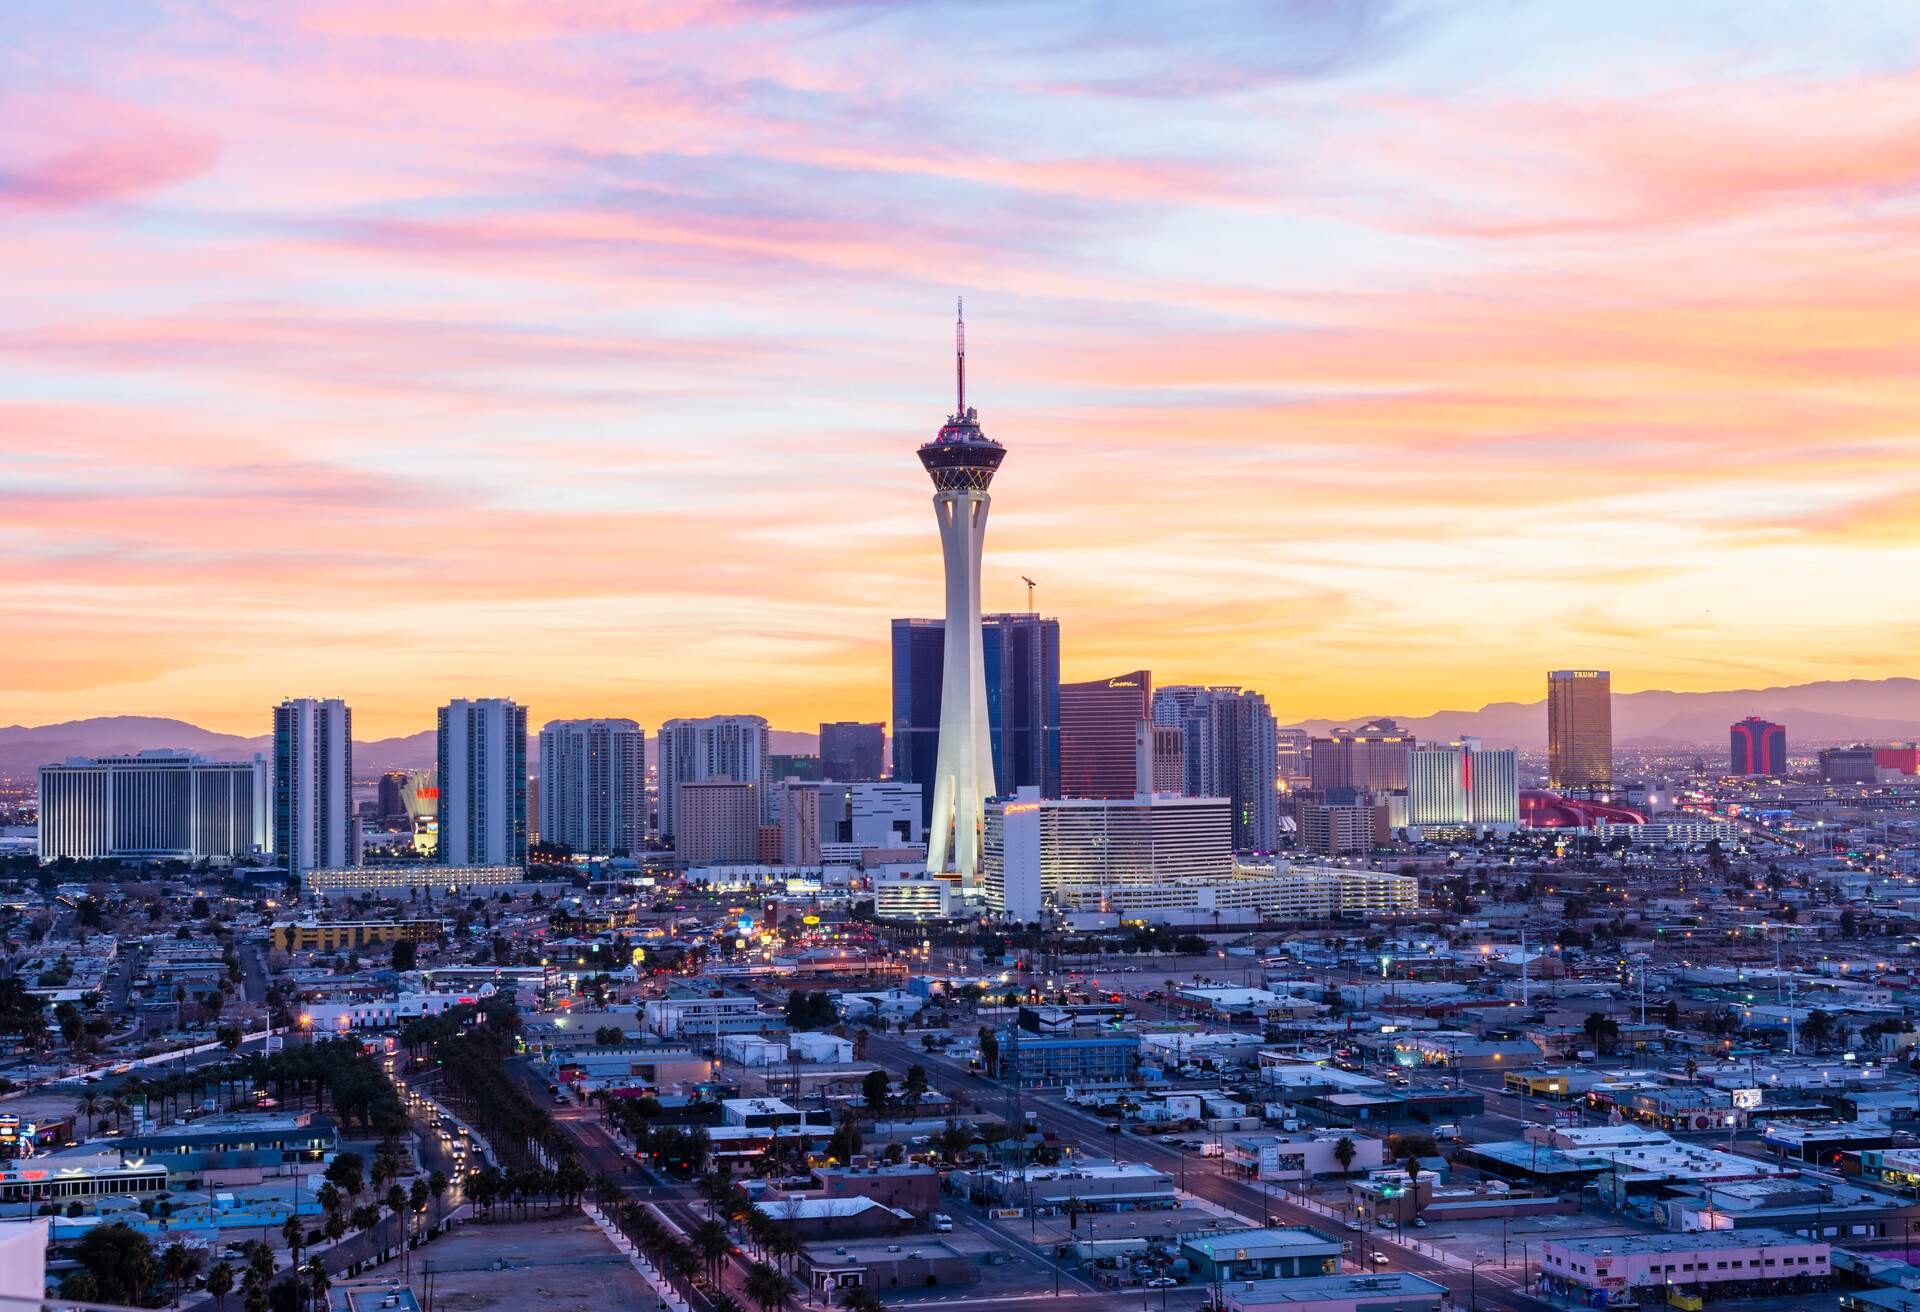 Las Vegas skyline at sunset.